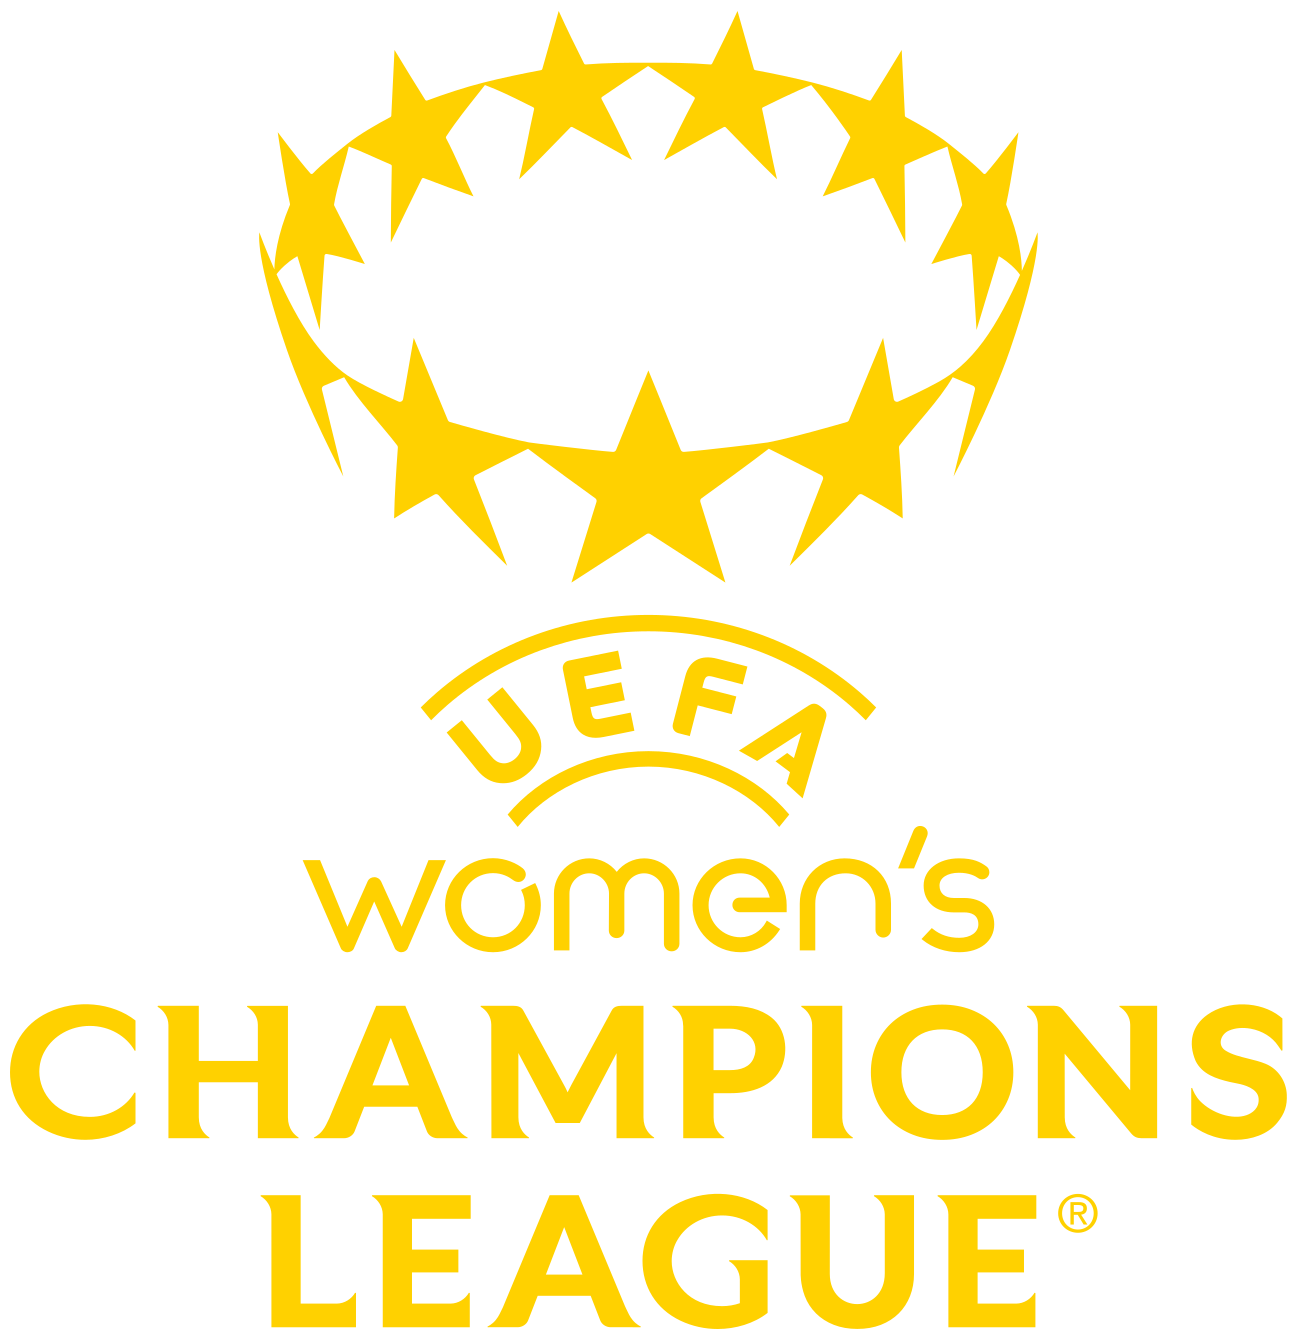 UEFA Women's Champions League logo